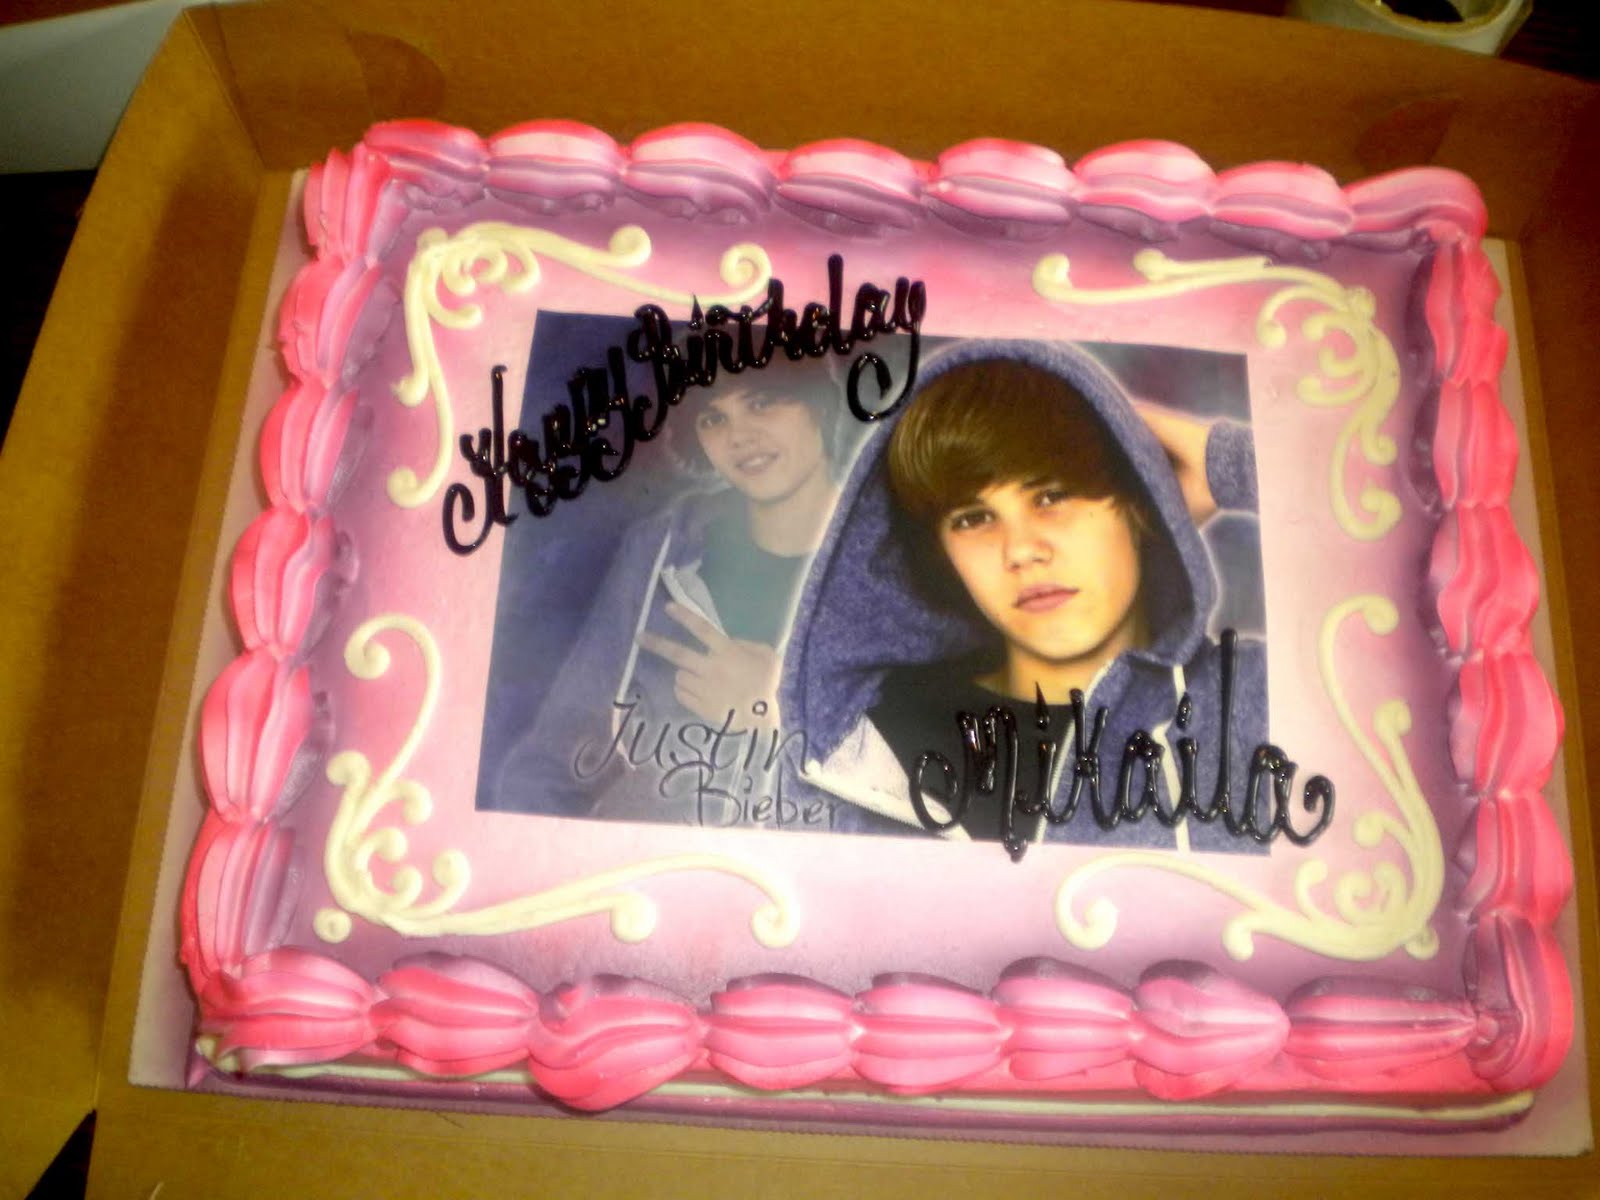 Hector's Custom Cakes: Justin Bieber Cakes1600 x 1200